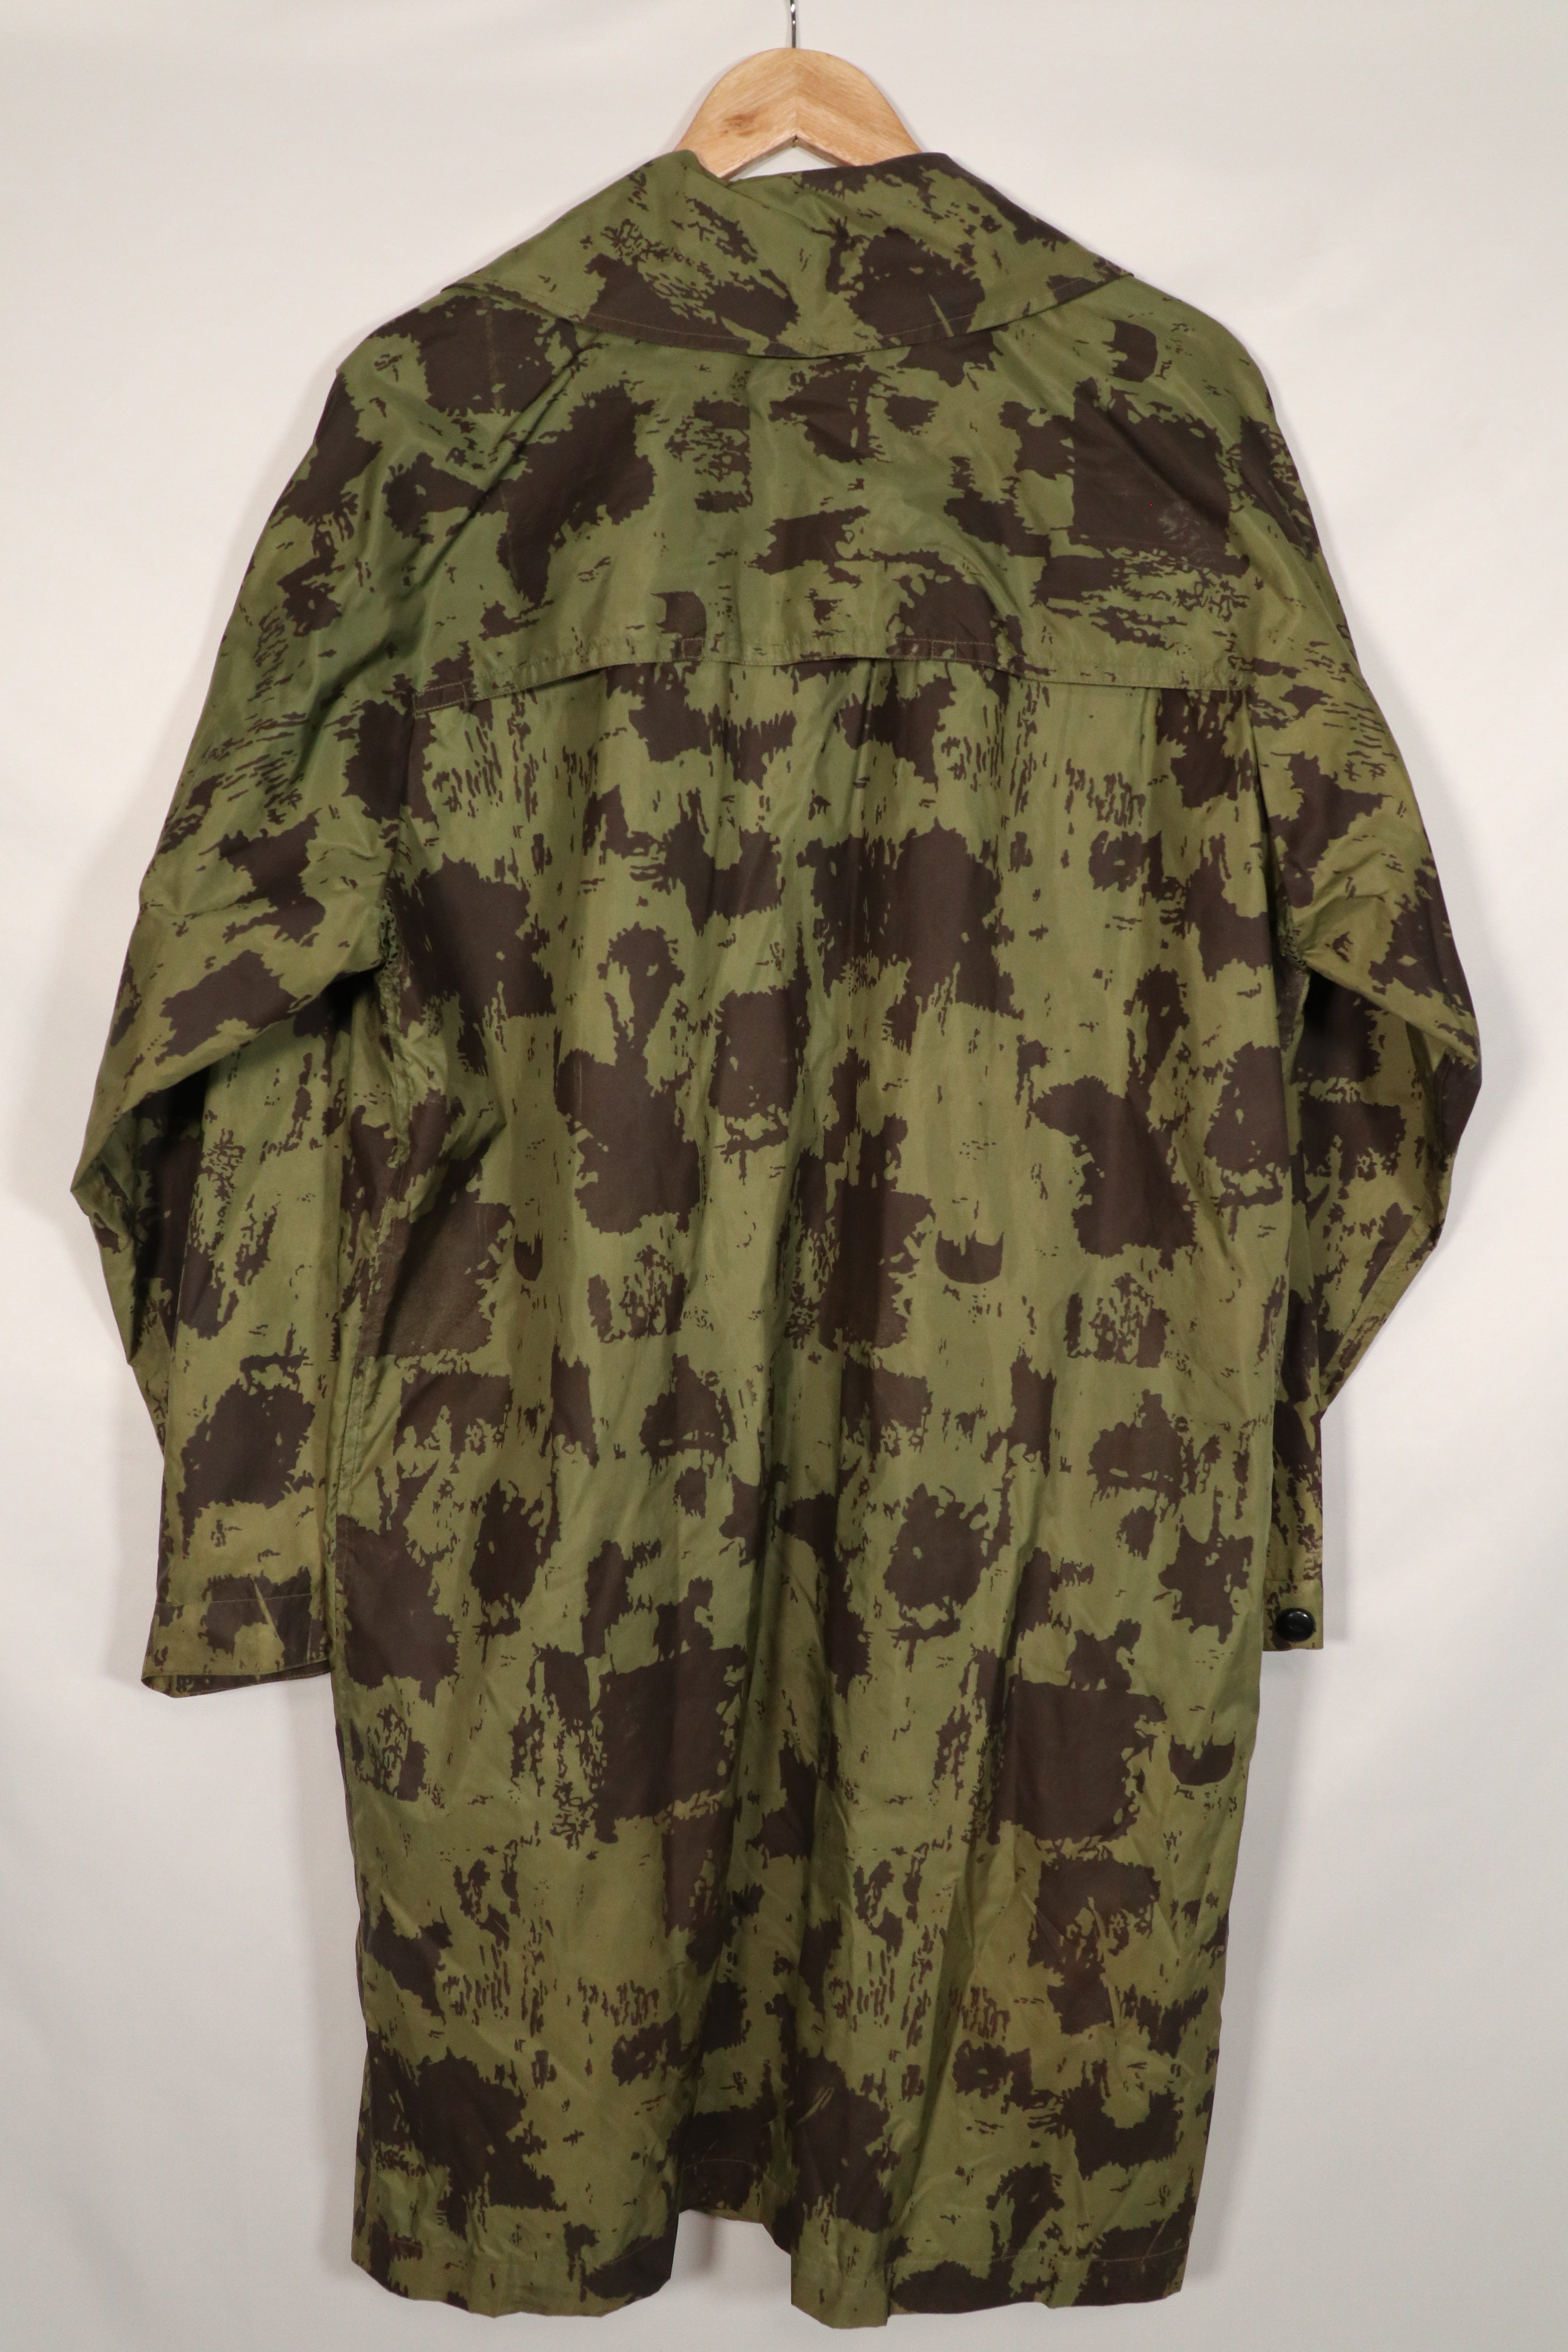 Real 1966 Australian Army raincoat, used, faded, used.